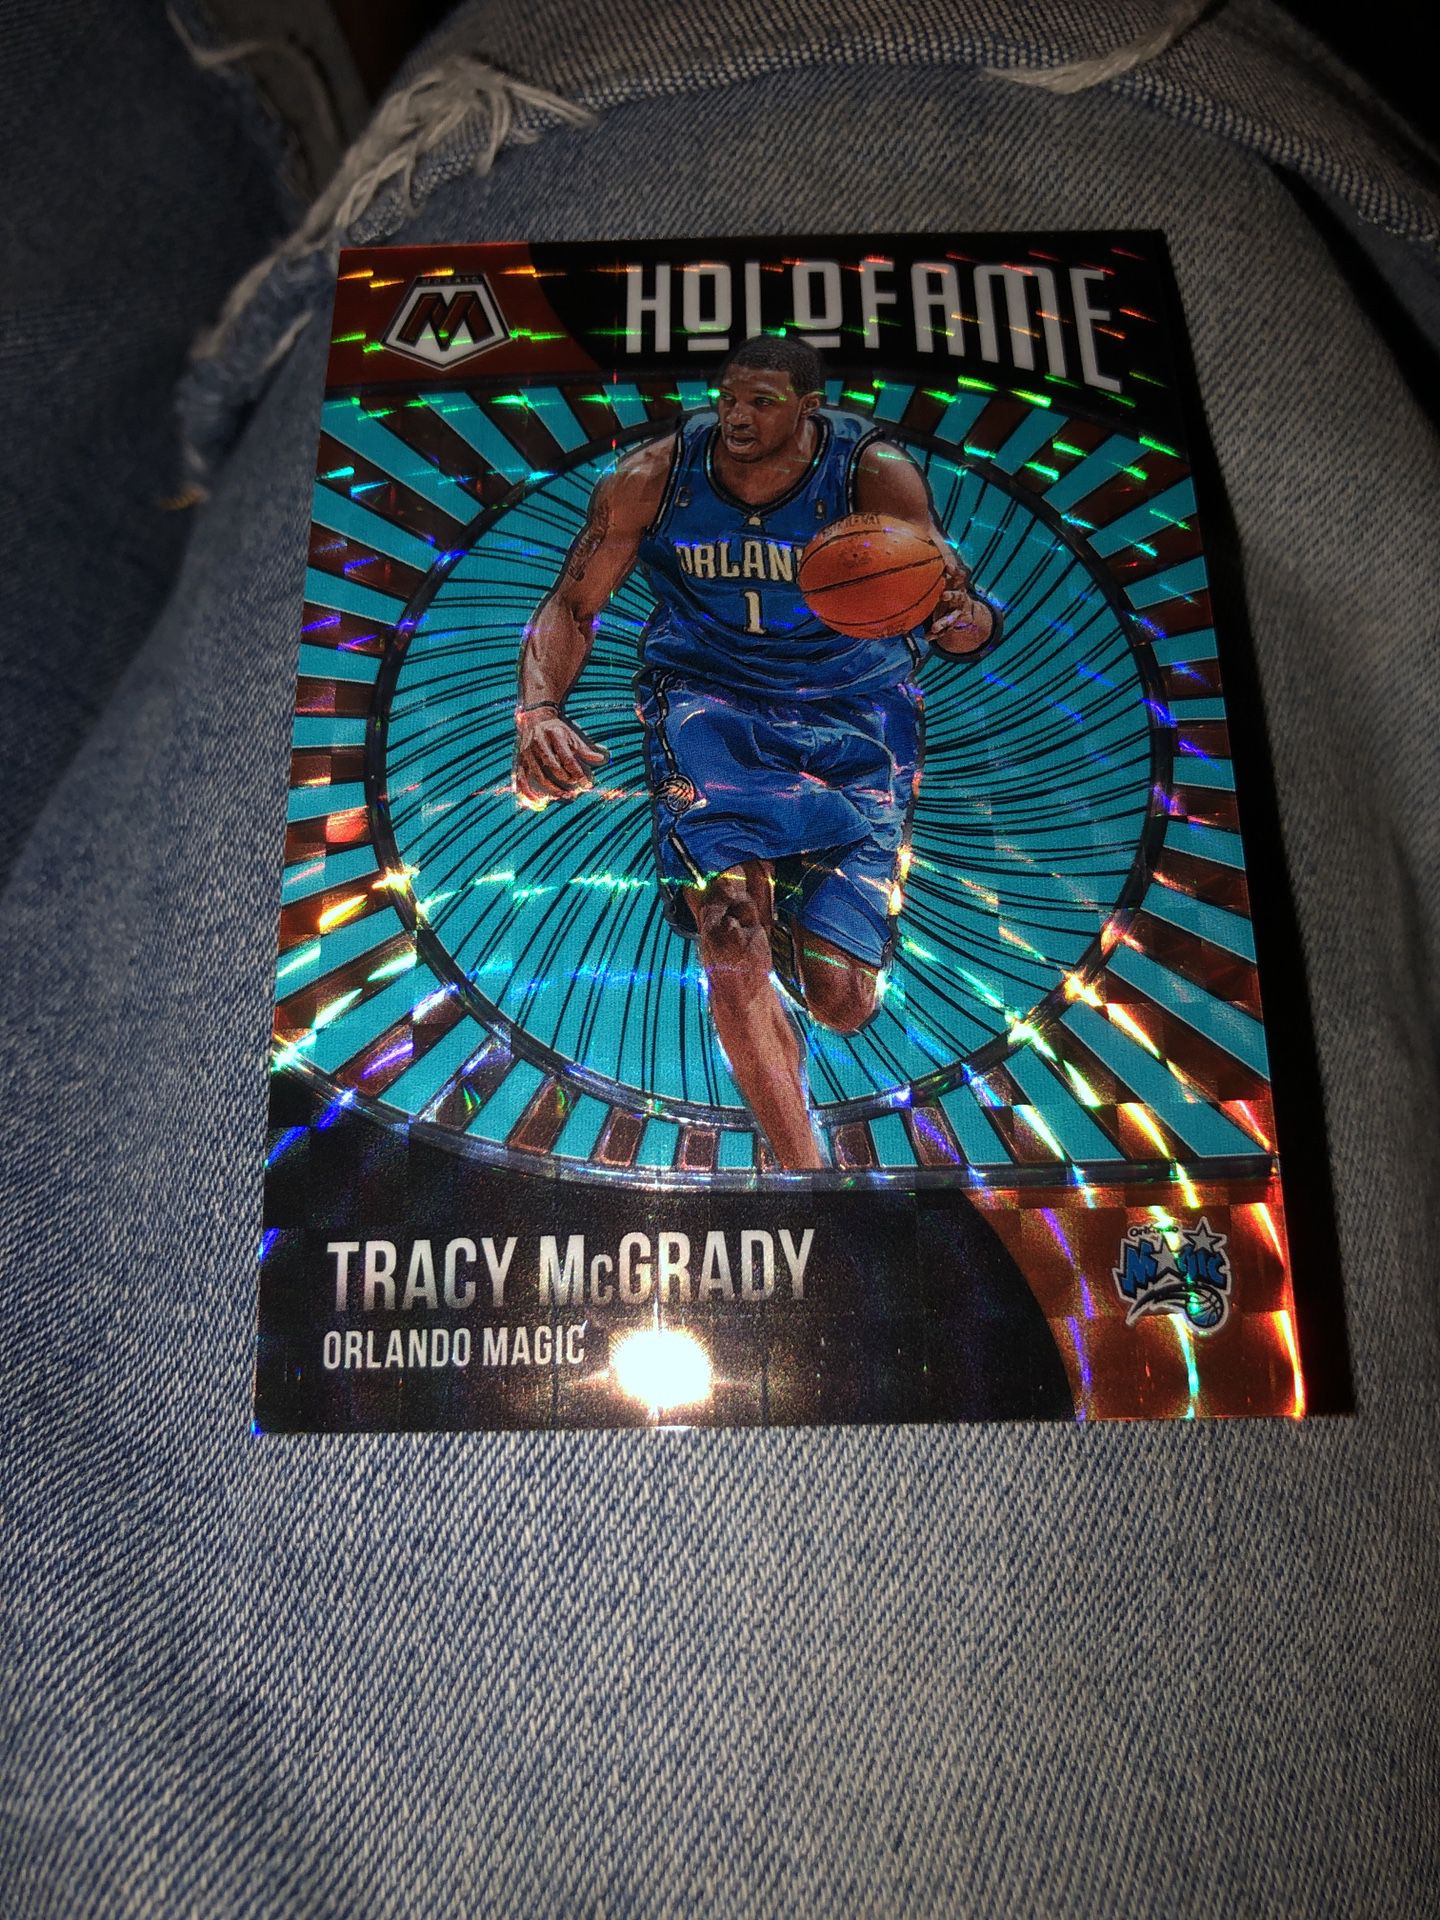 20-21 Mosaic Basketball Holo Fame Tracy McGrady /15 